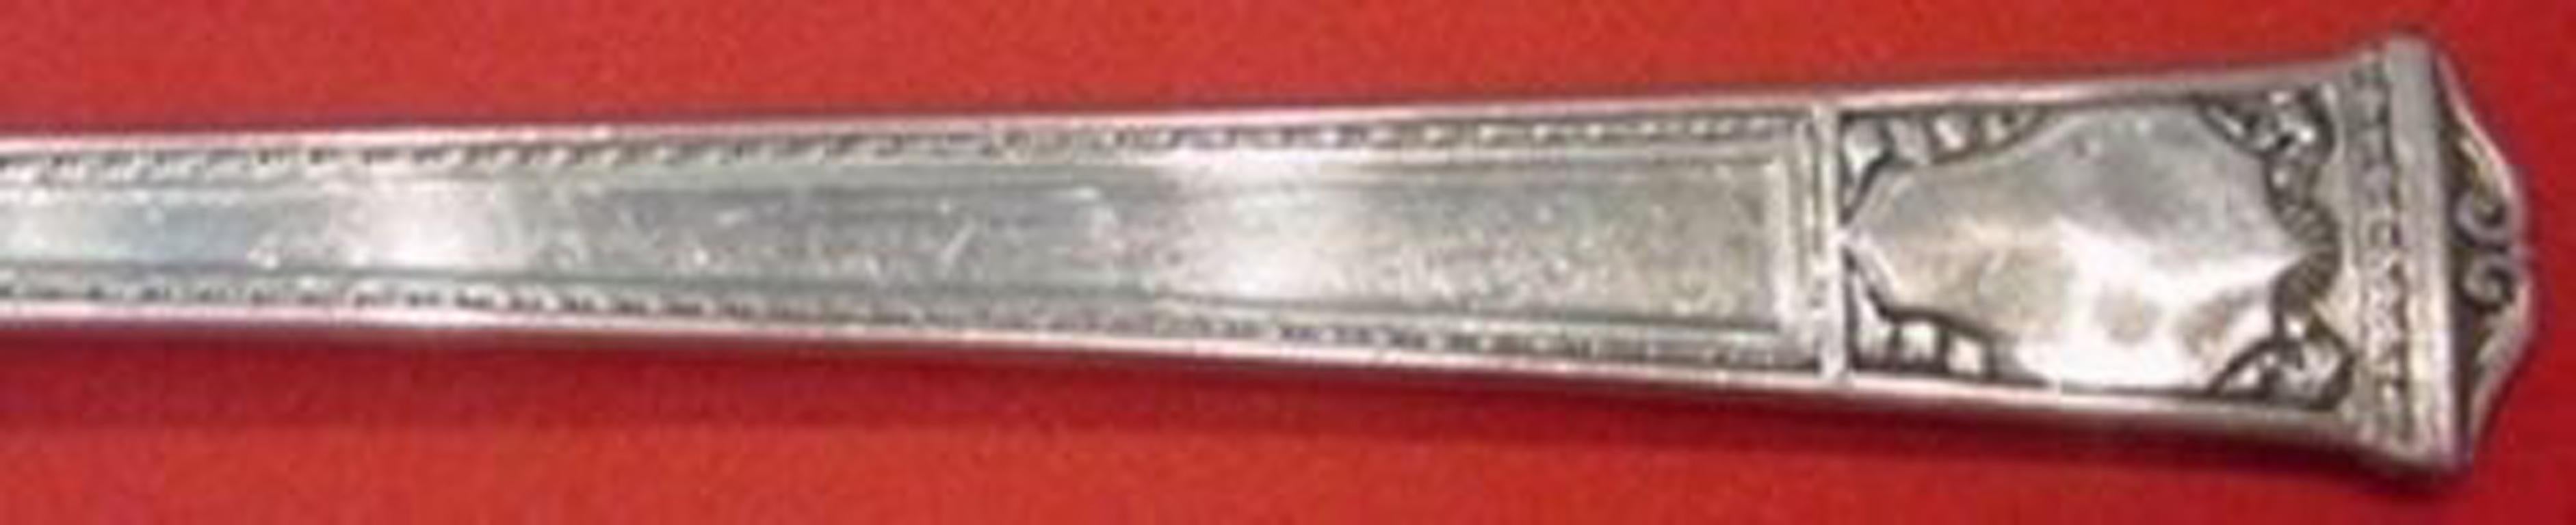 Sterling silver preserver spoon, 7 1/8